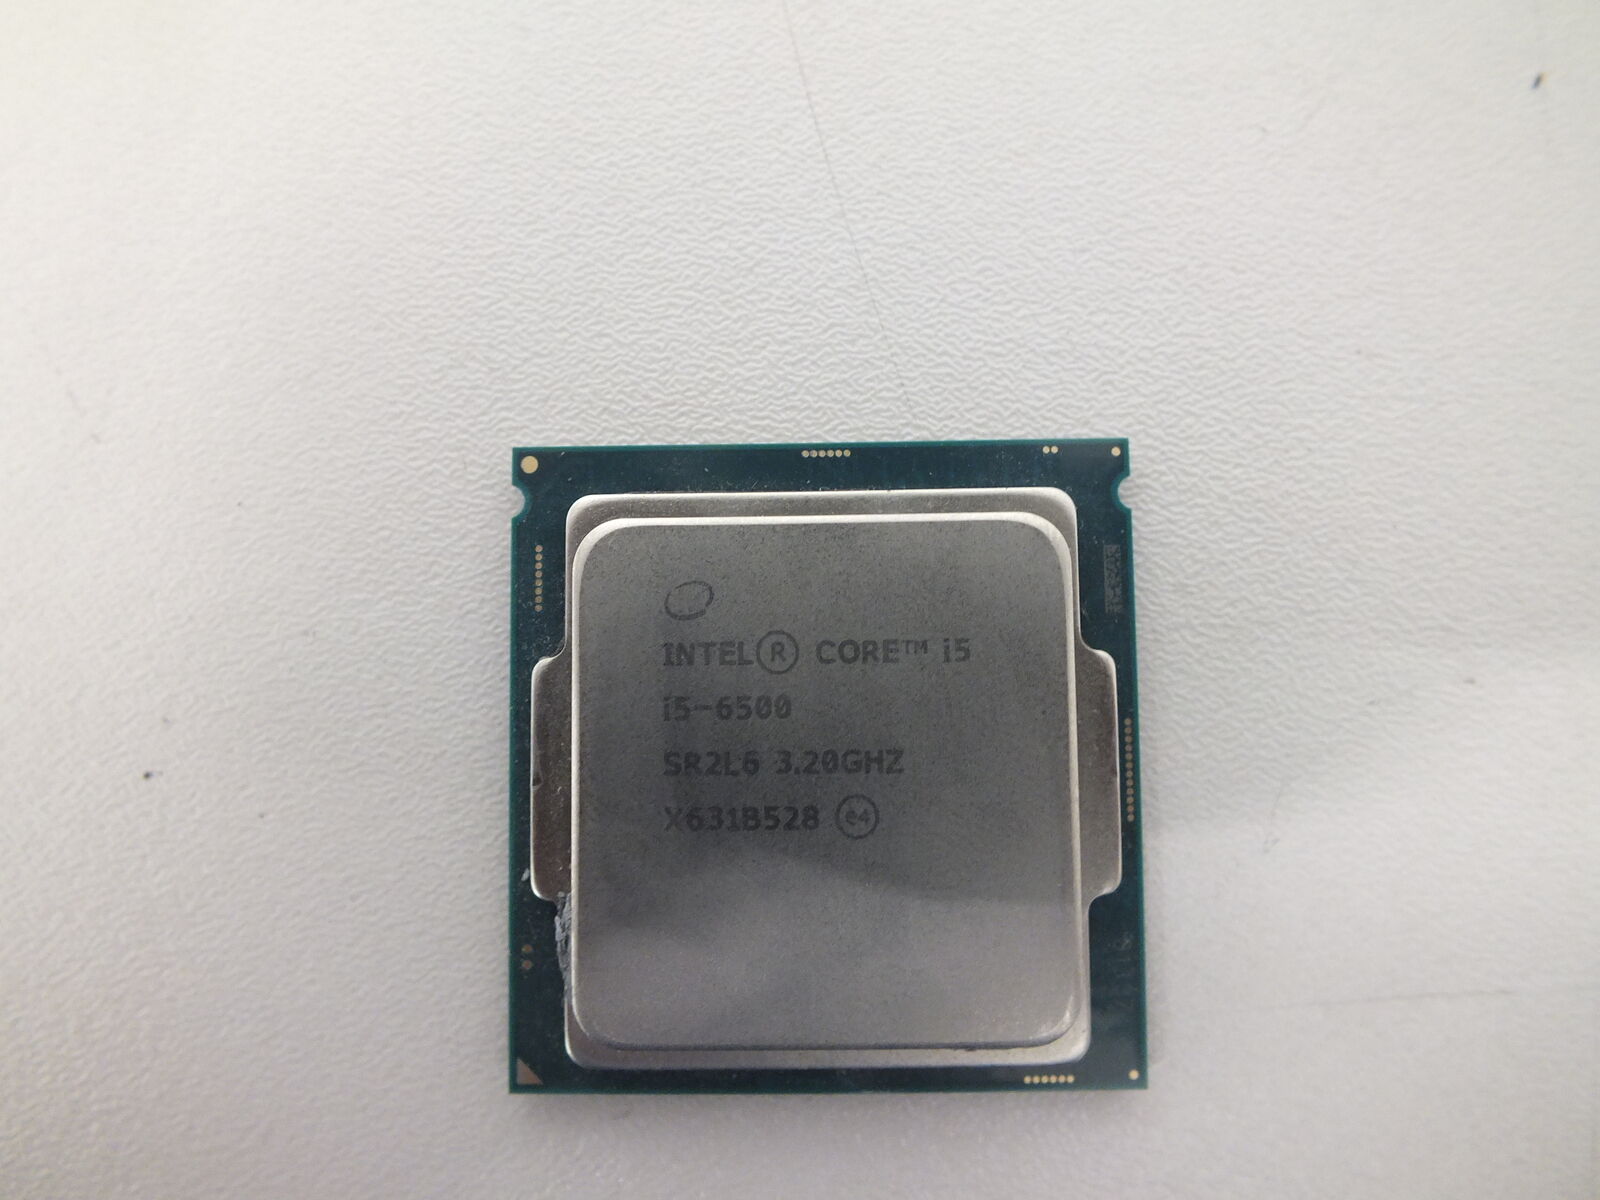 [ LOT OF 4] Intel Core i5-6500 SR2L6 3.20 GHZ Processor